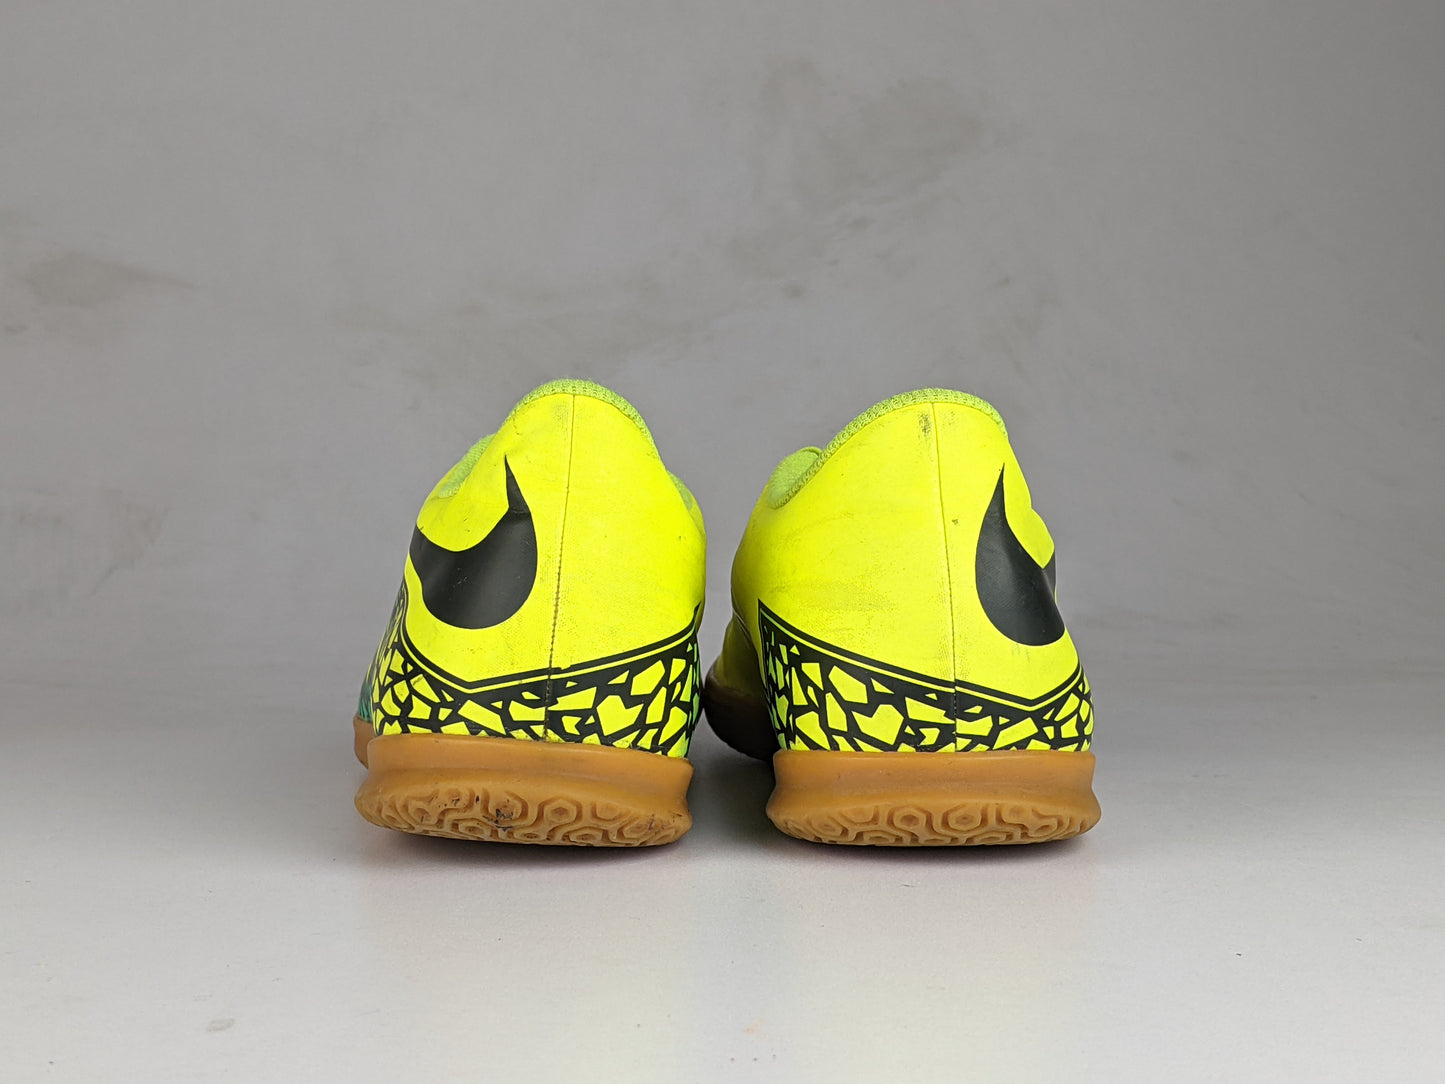 Nike Hypervenom Phade II IC 'Yellow/Black